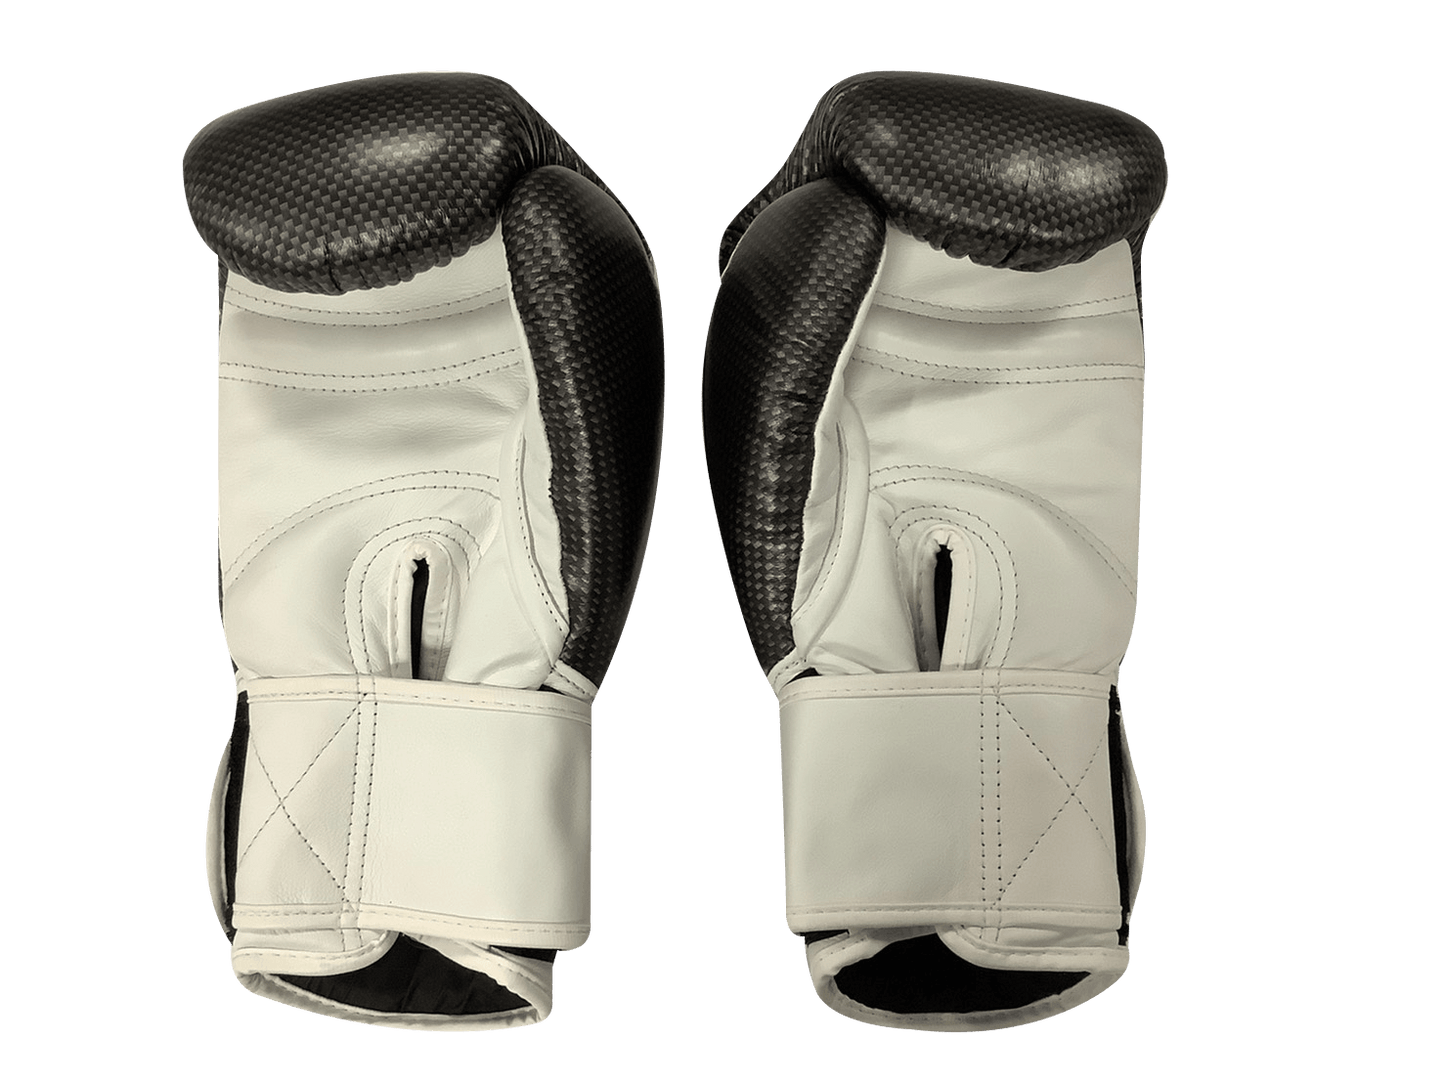 Top King Boxing Gloves Empower Creativity TKBGEM01-02 Black White - SUPER EXPORT SHOP